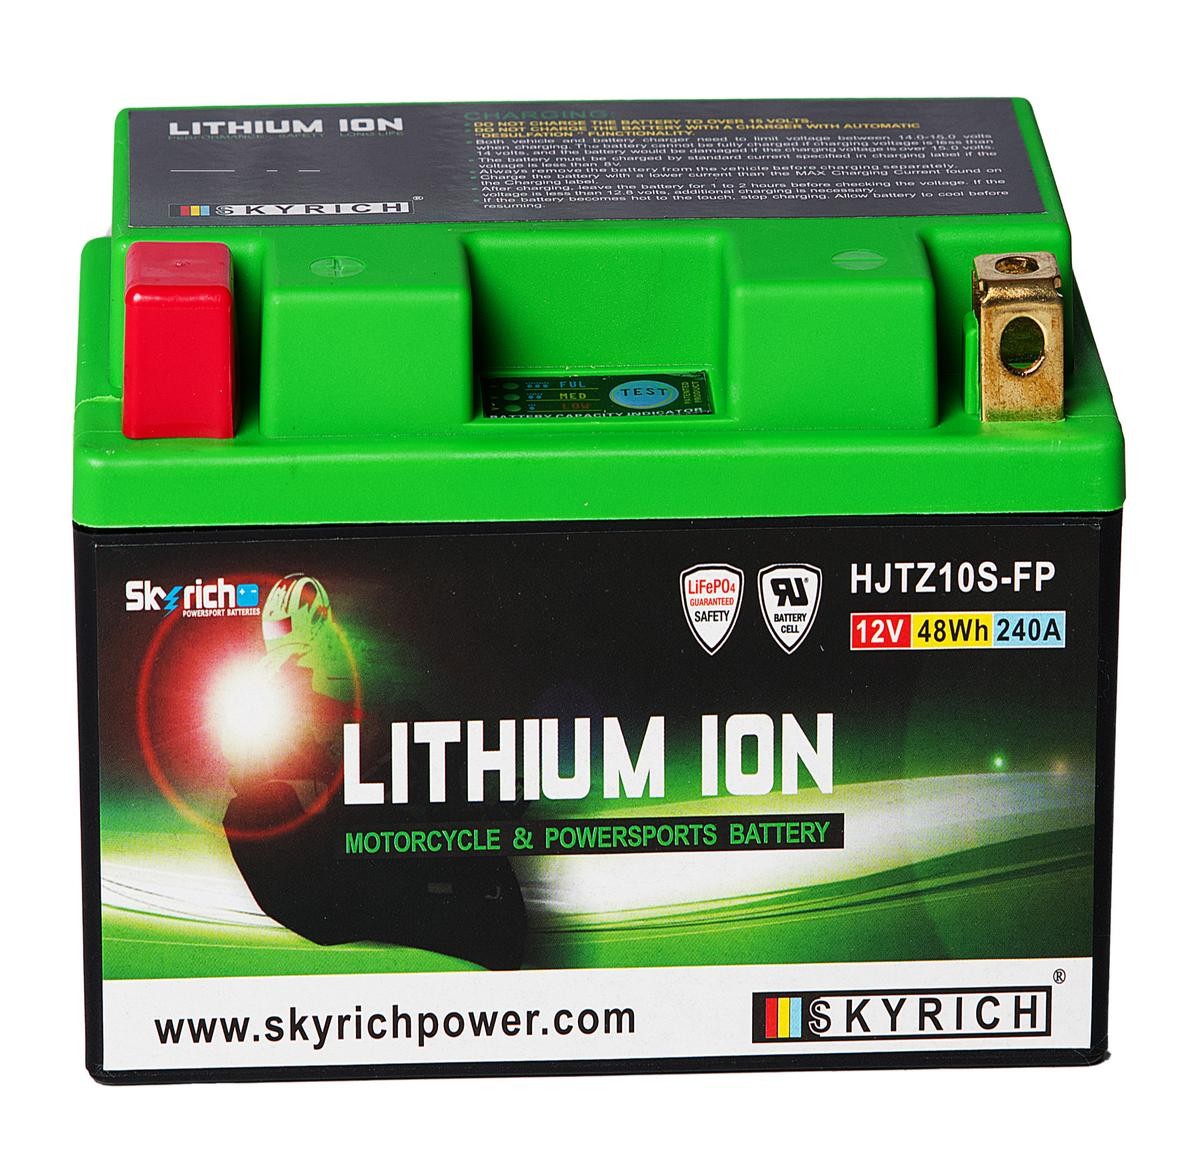 YAMAHA MT Batterie 12V 4Ah 240A N Li-Ionen-Batterie SKYRICH LITHIUM ION HJTZ10S-FP